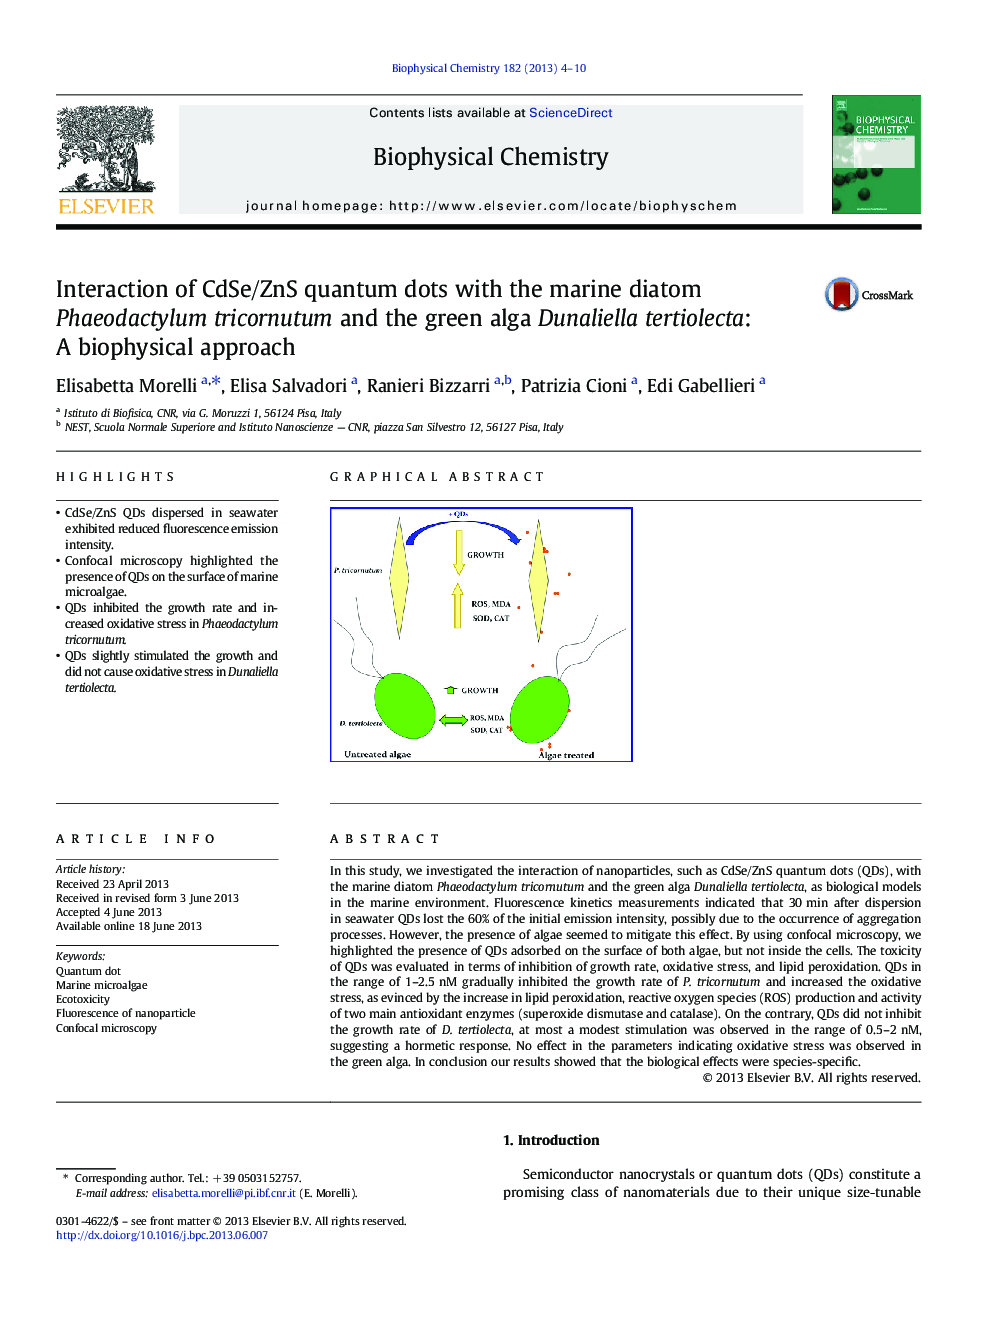 Interaction of CdSe/ZnS quantum dots with the marine diatom Phaeodactylum tricornutum and the green alga Dunaliella tertiolecta: A biophysical approach